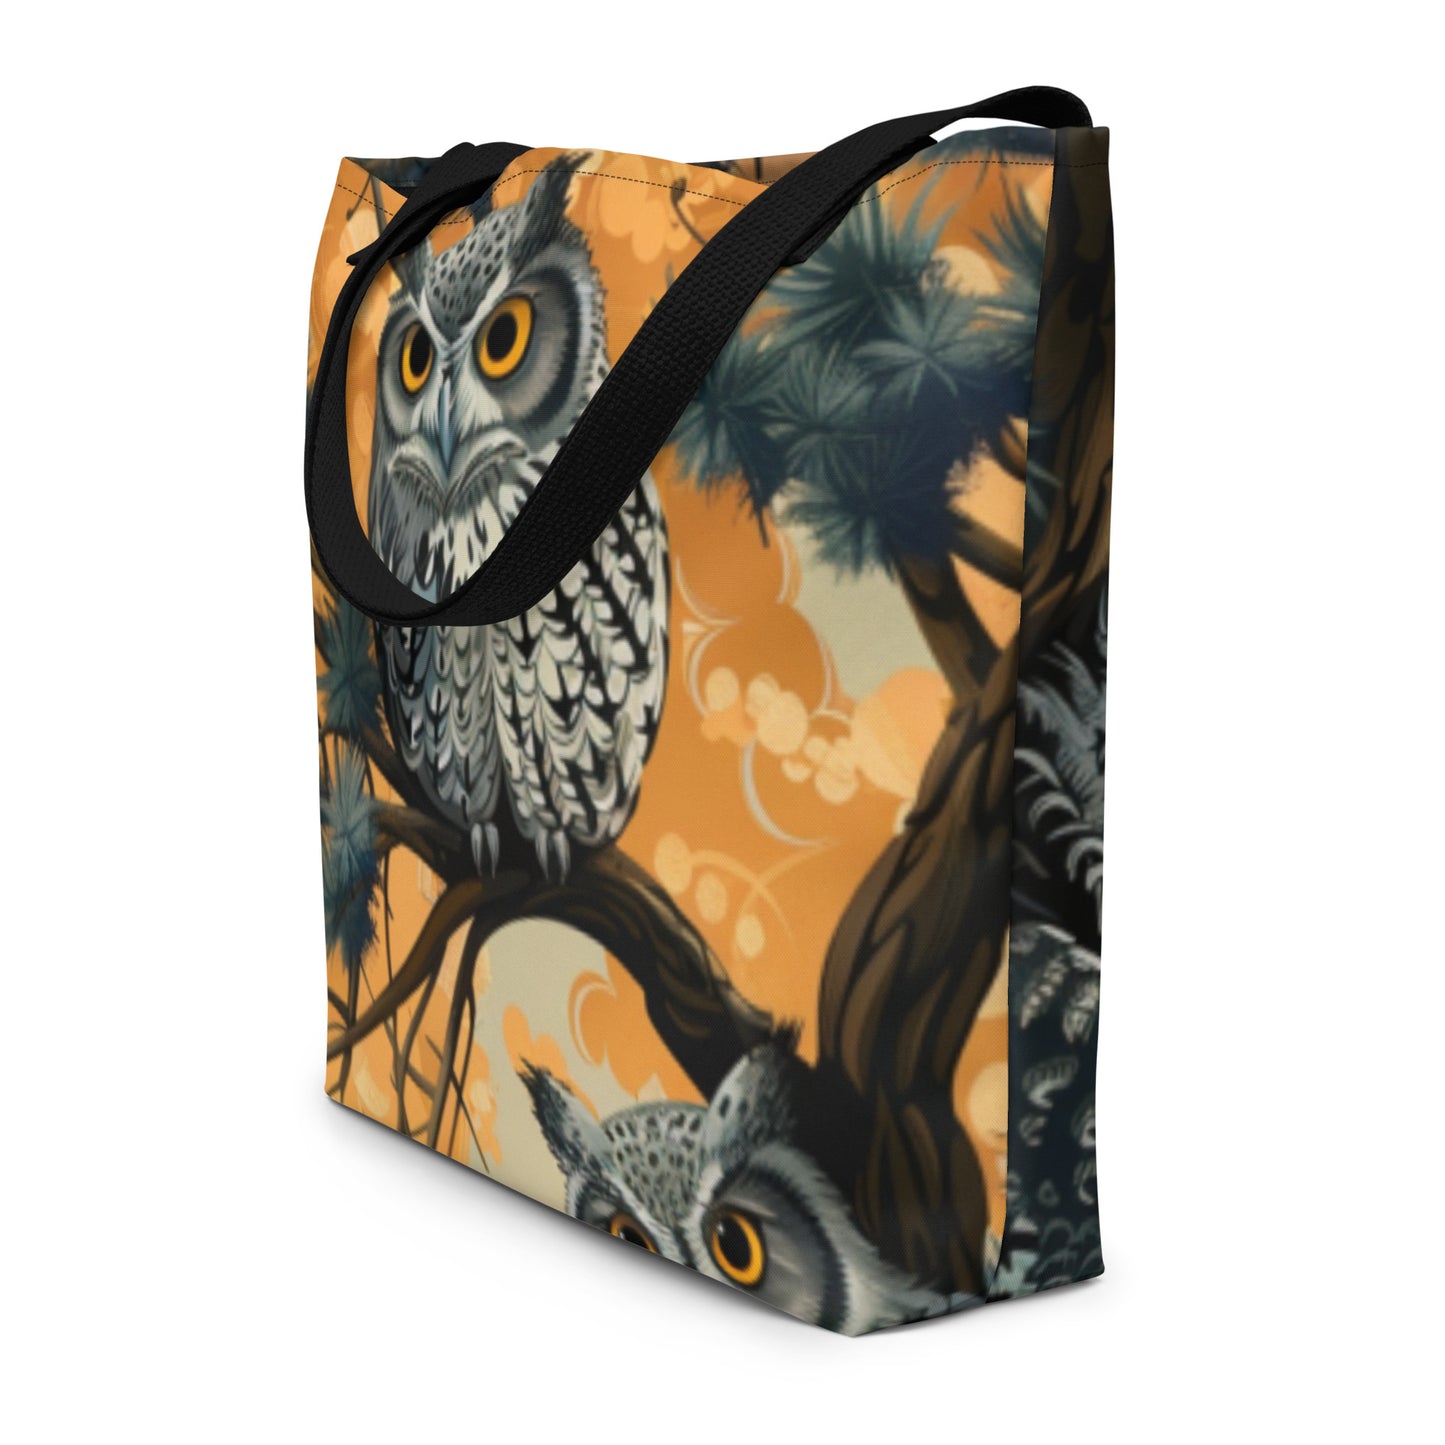 Owl 2 Large Tote Bag